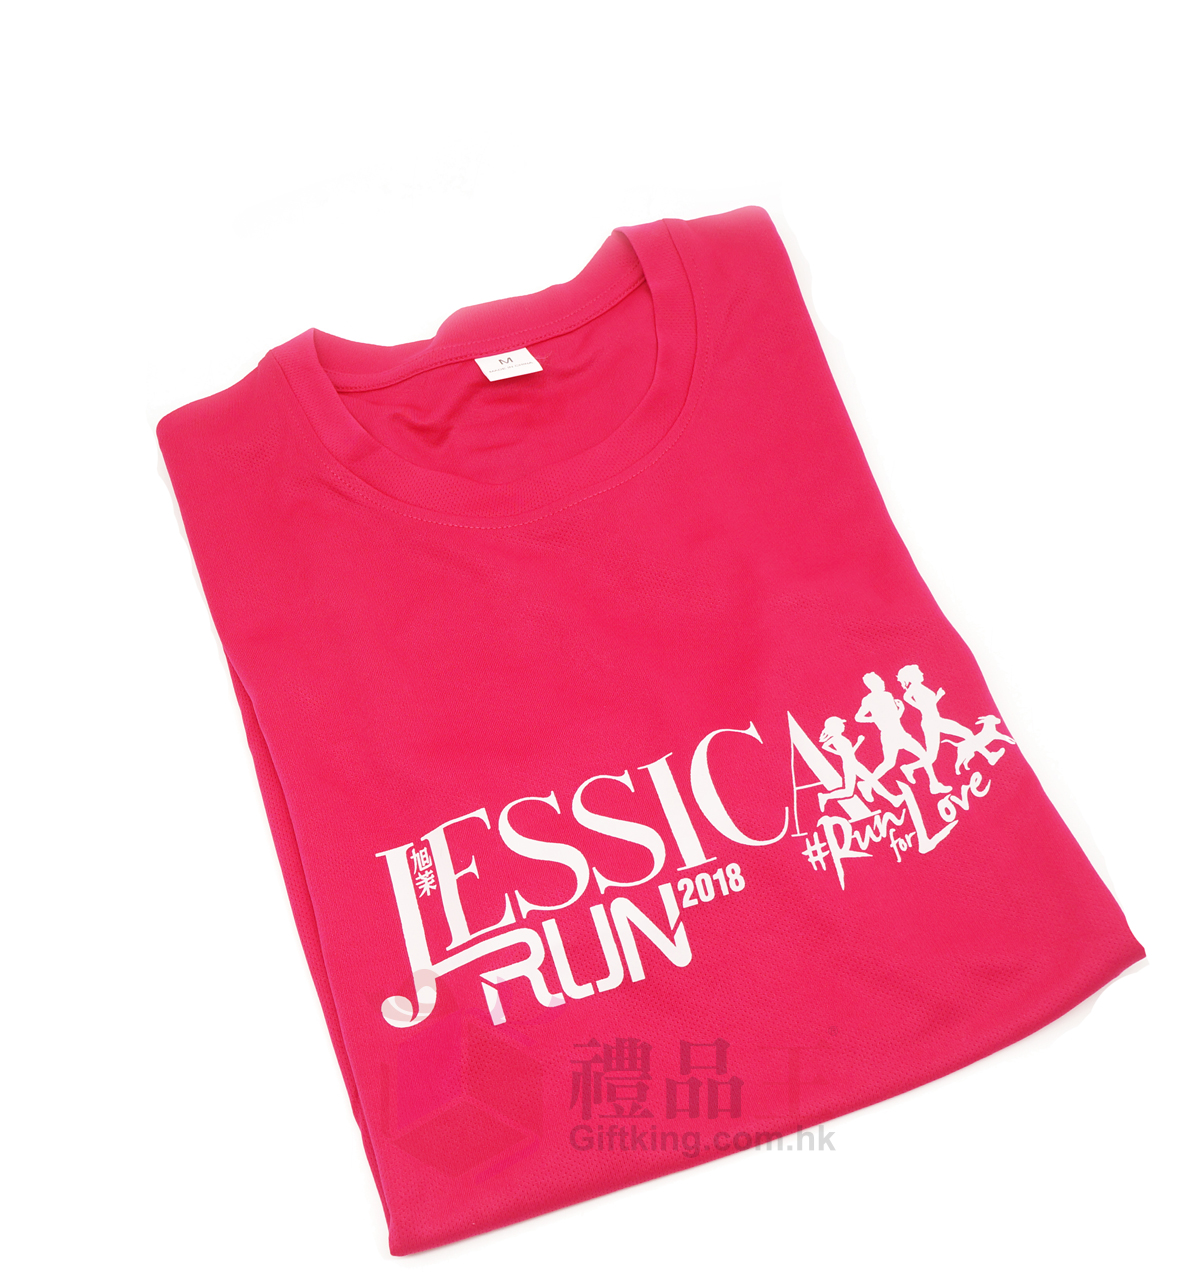 Jessica run Charity T-Shirt (Clothing Gift)